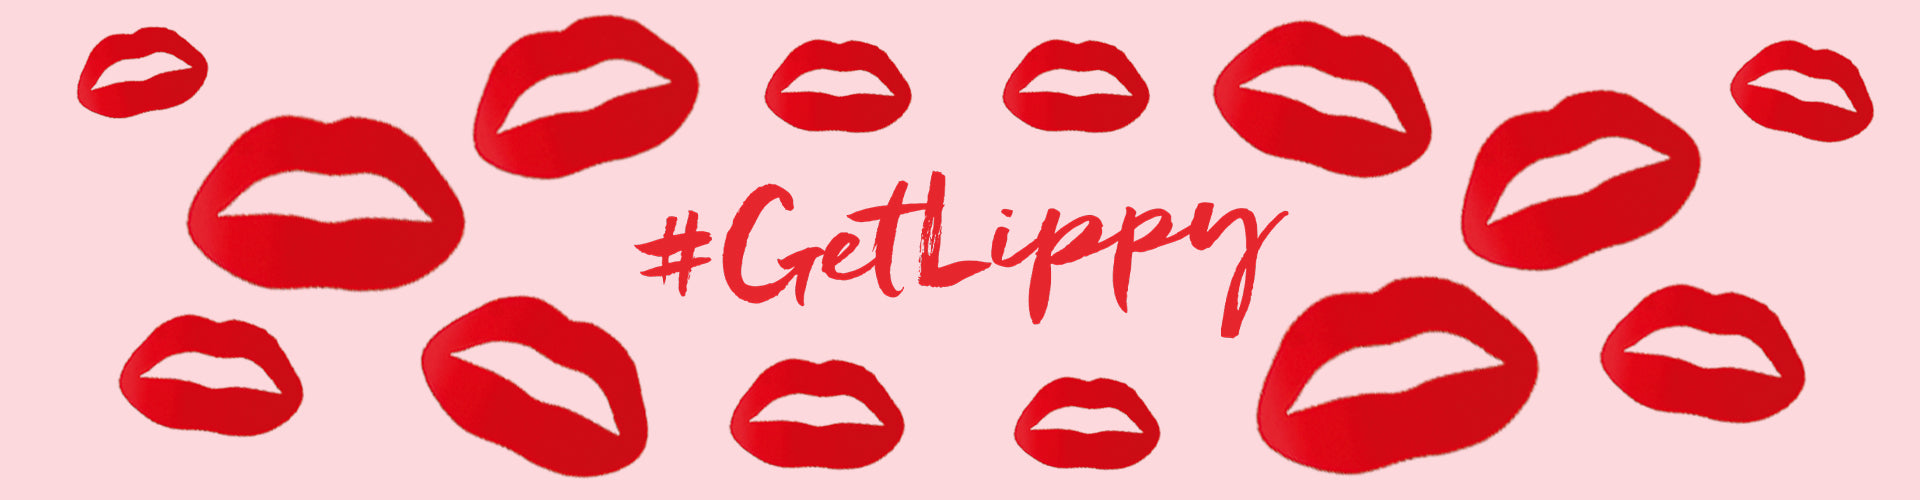 Let’s Get Lippy